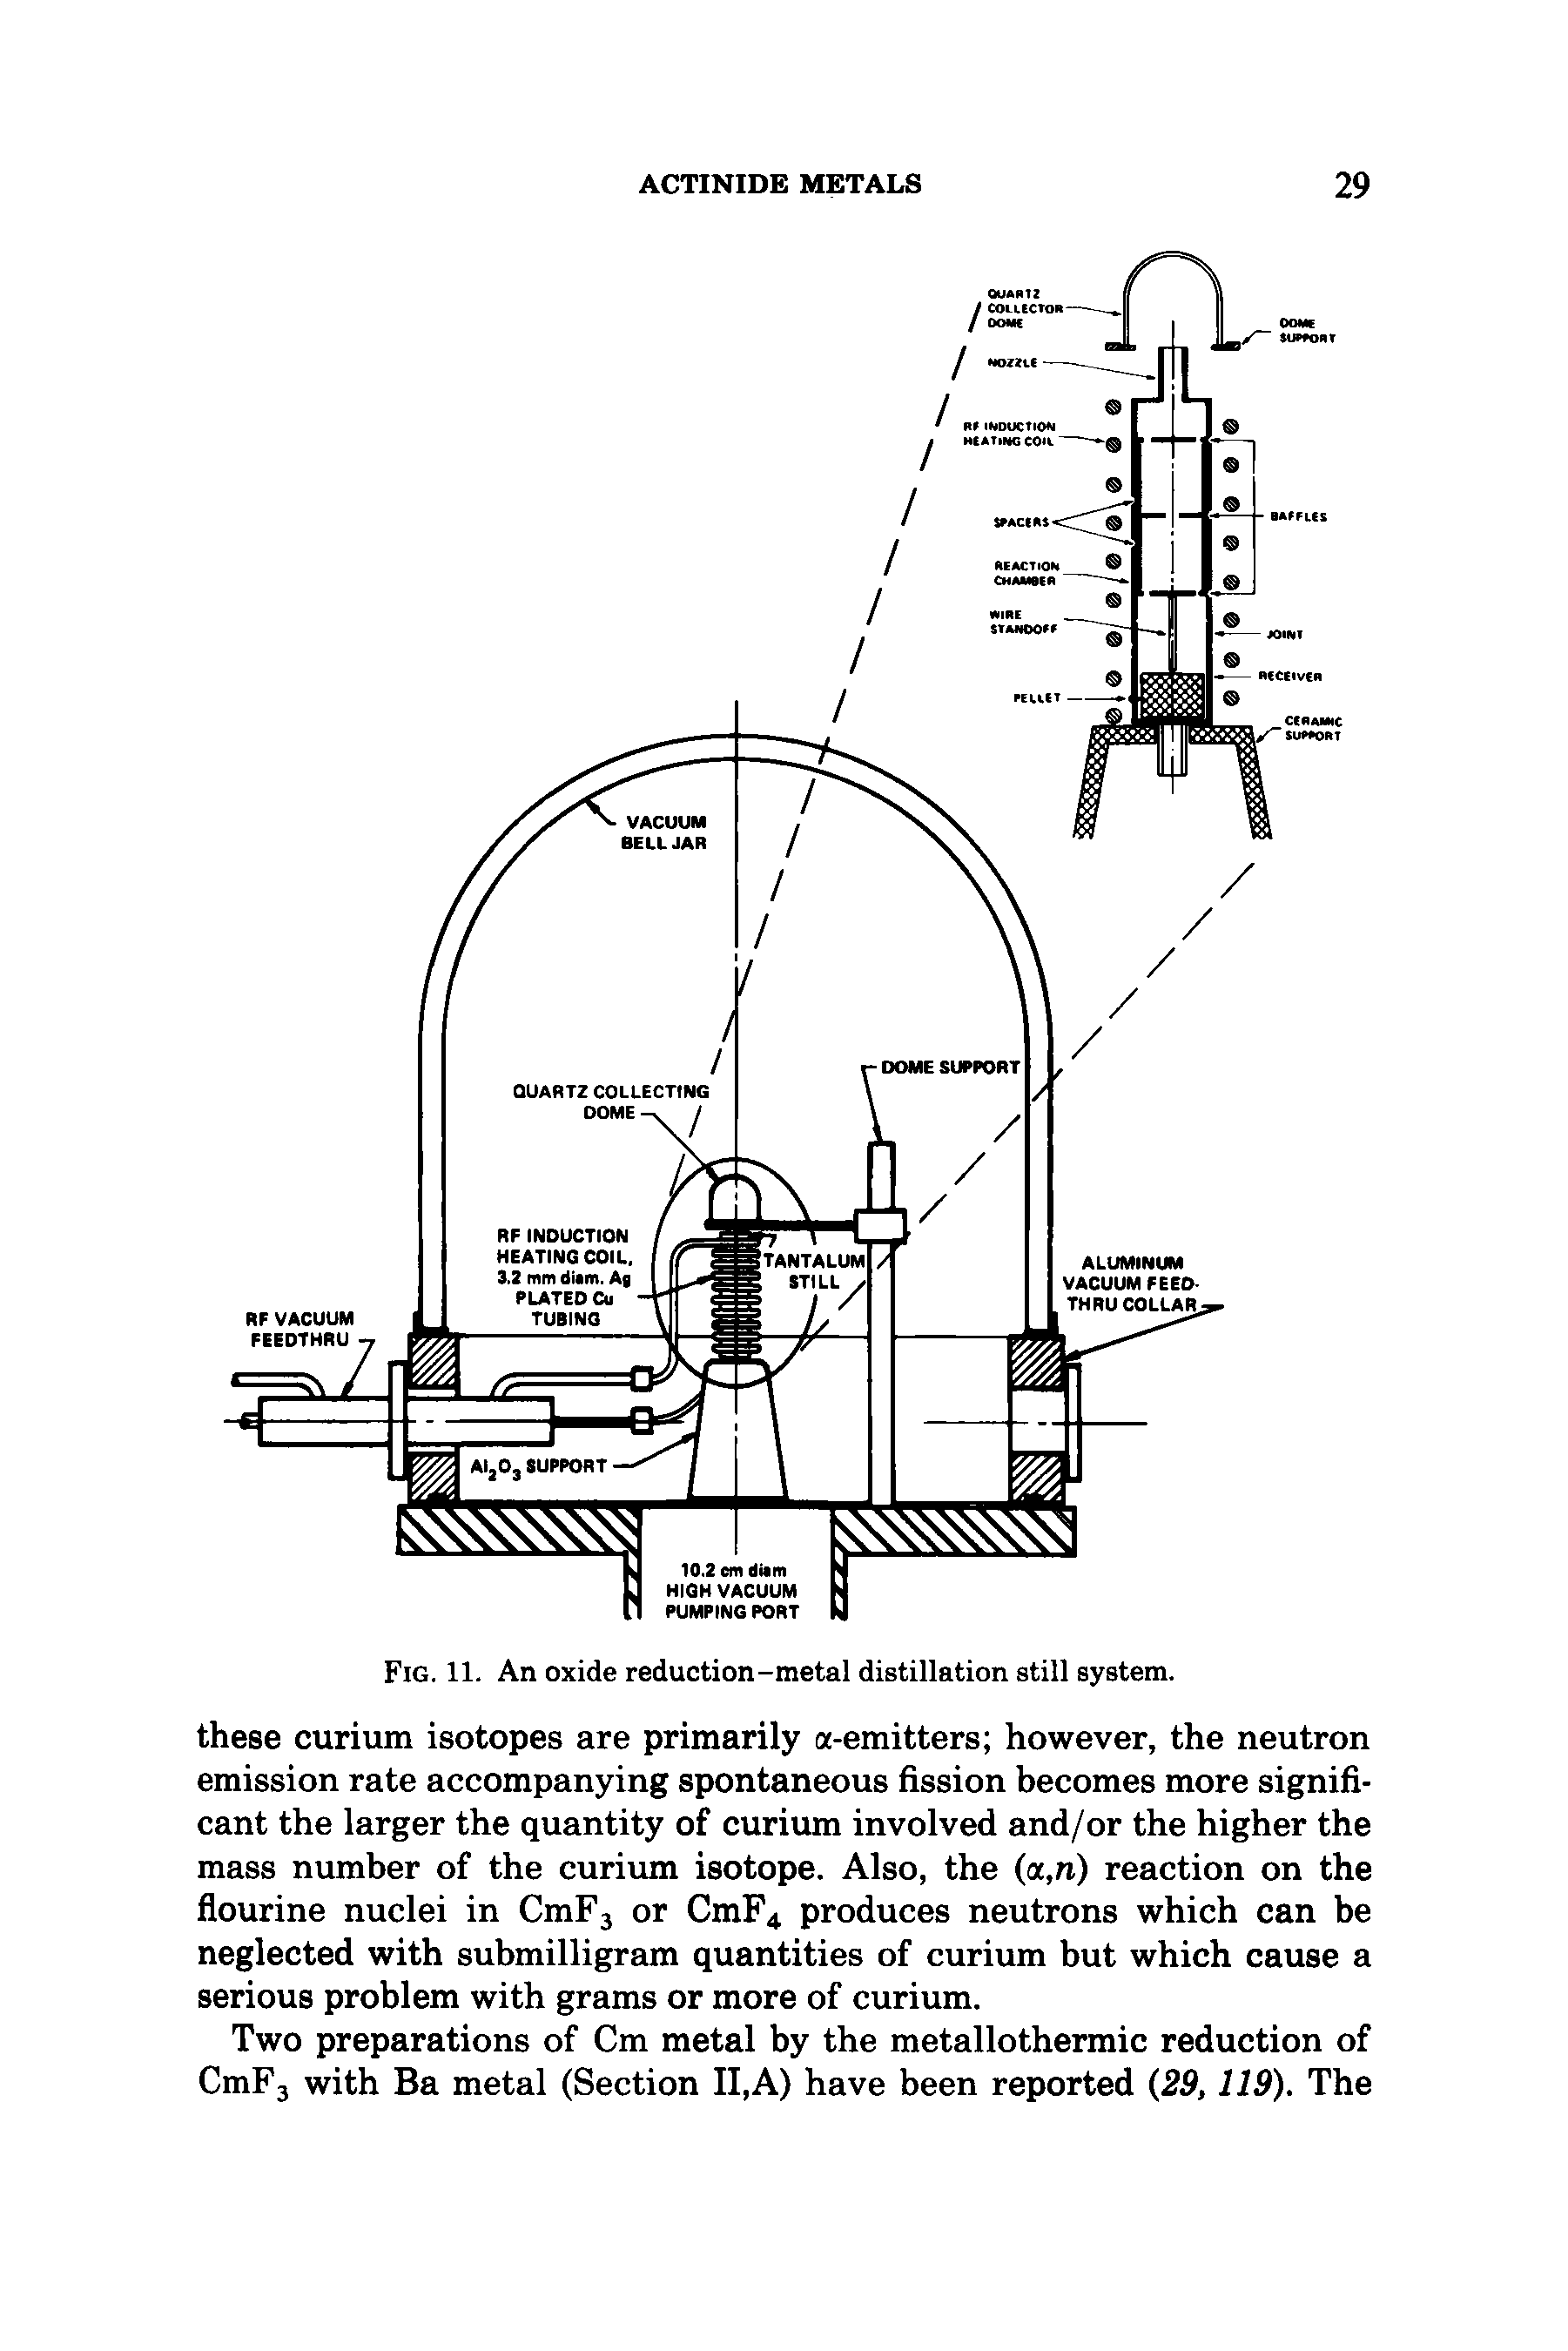 Fig. 11. An oxide reduction-metal distillation still system.